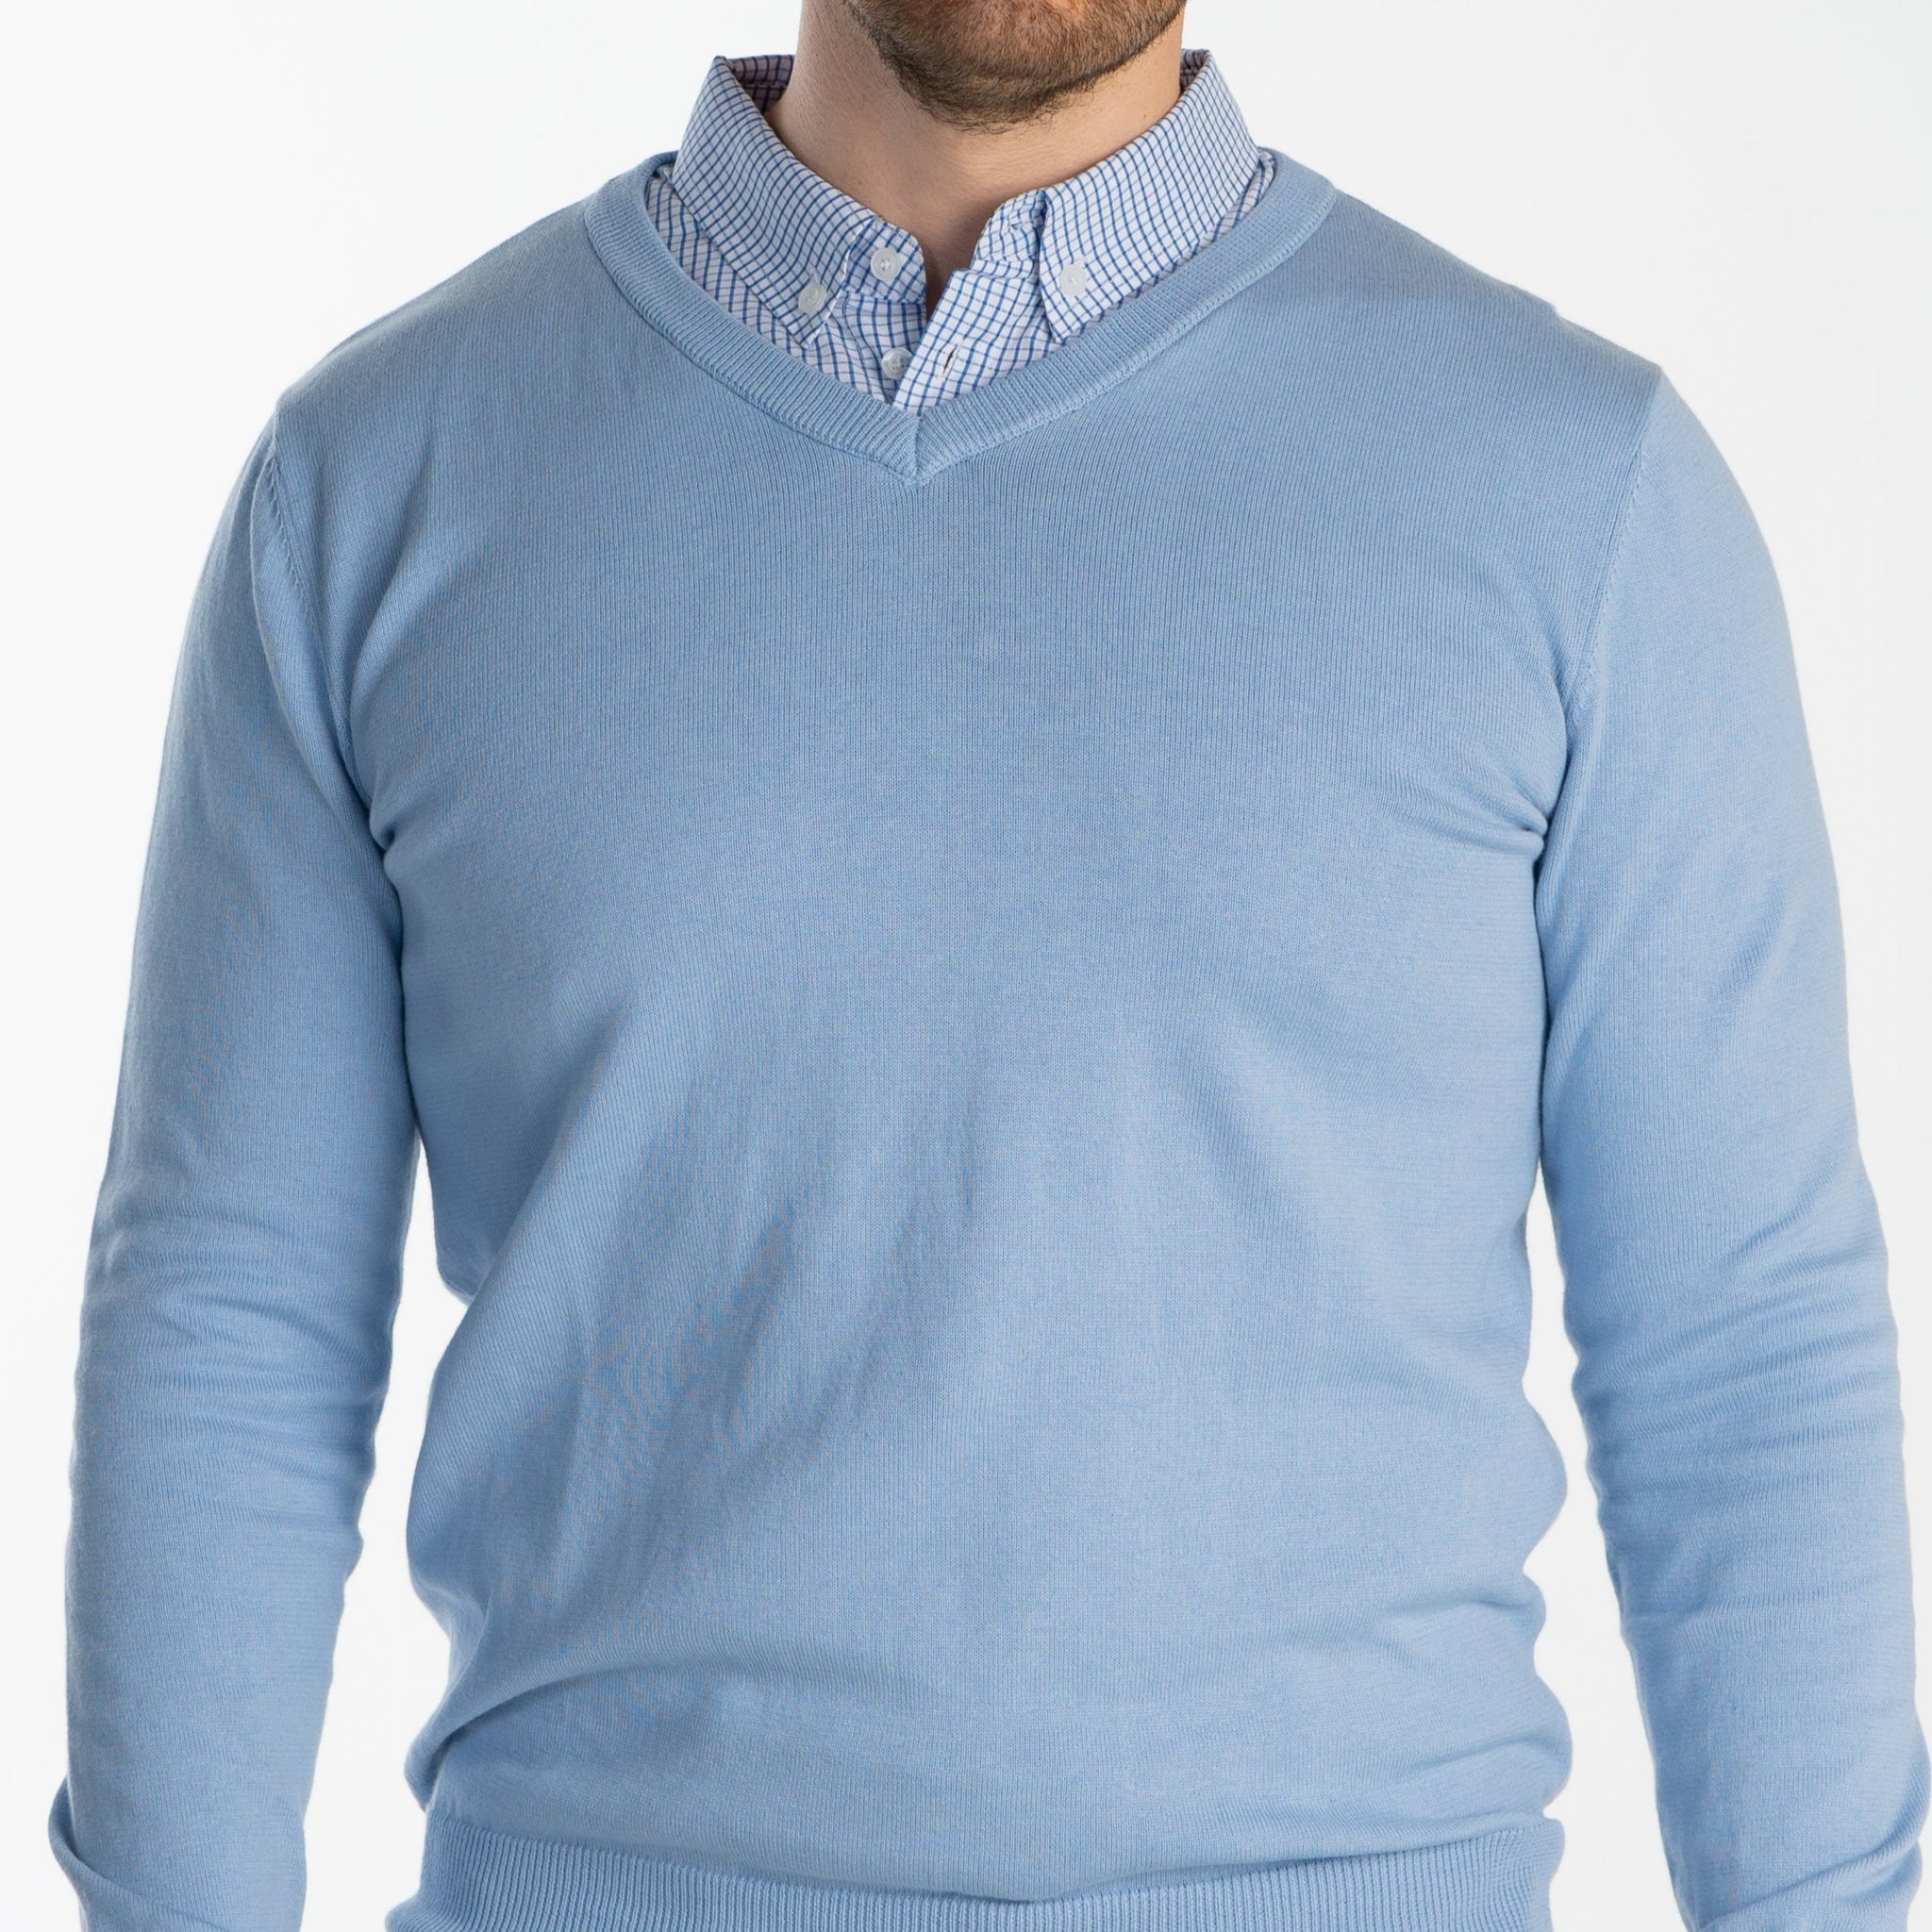 light blue sweater combination